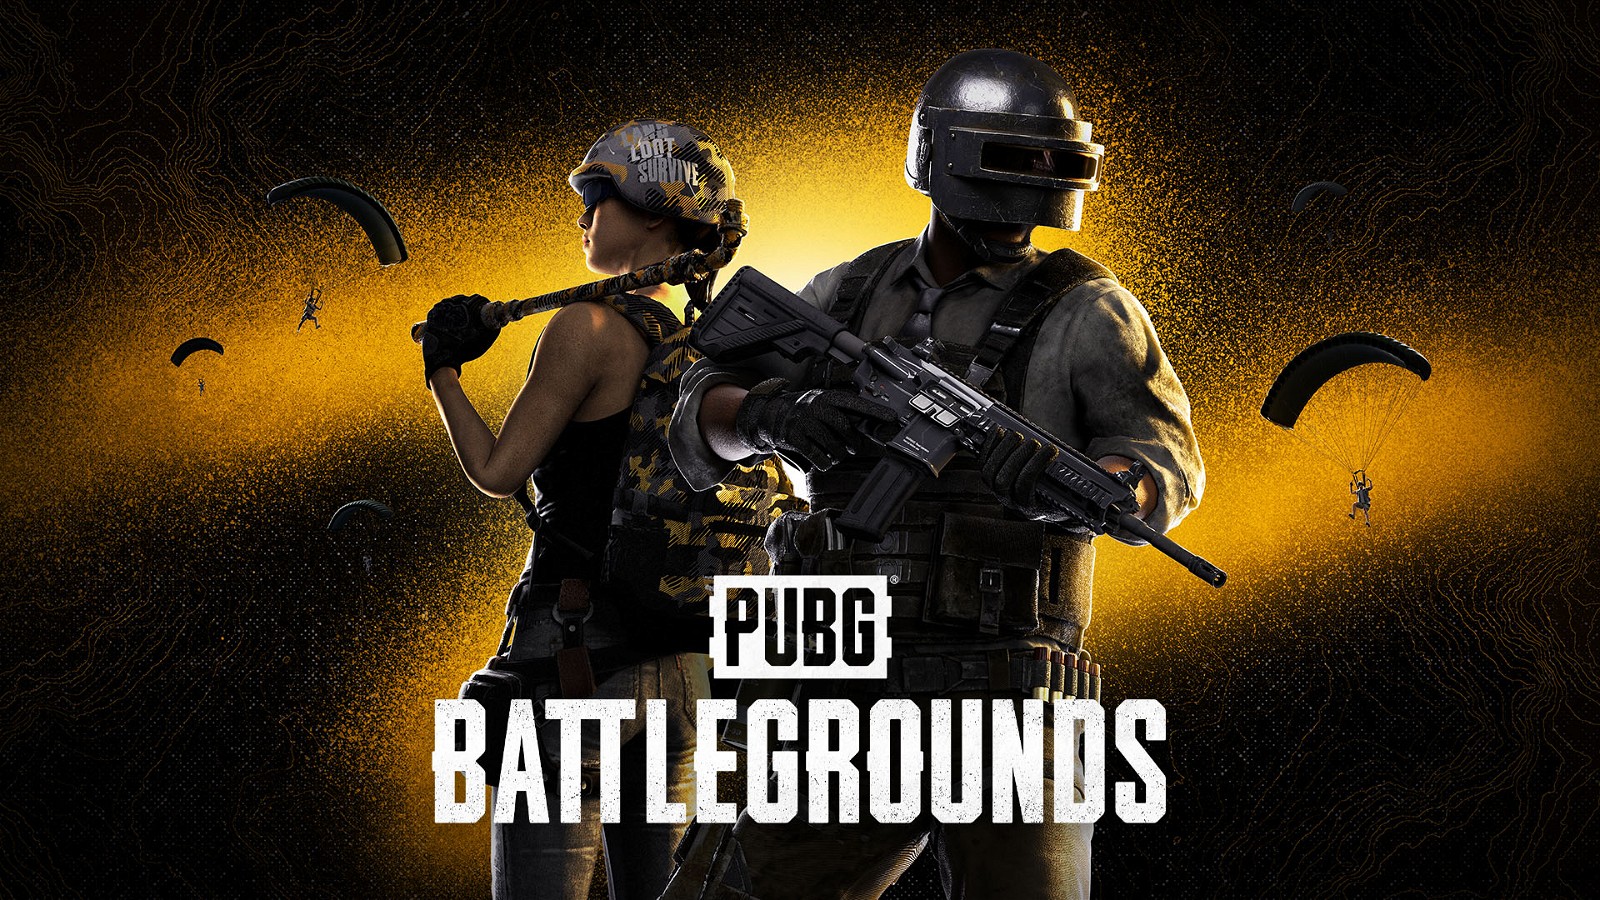 PUBG: Battlegrounds has sold 75 million copies. 